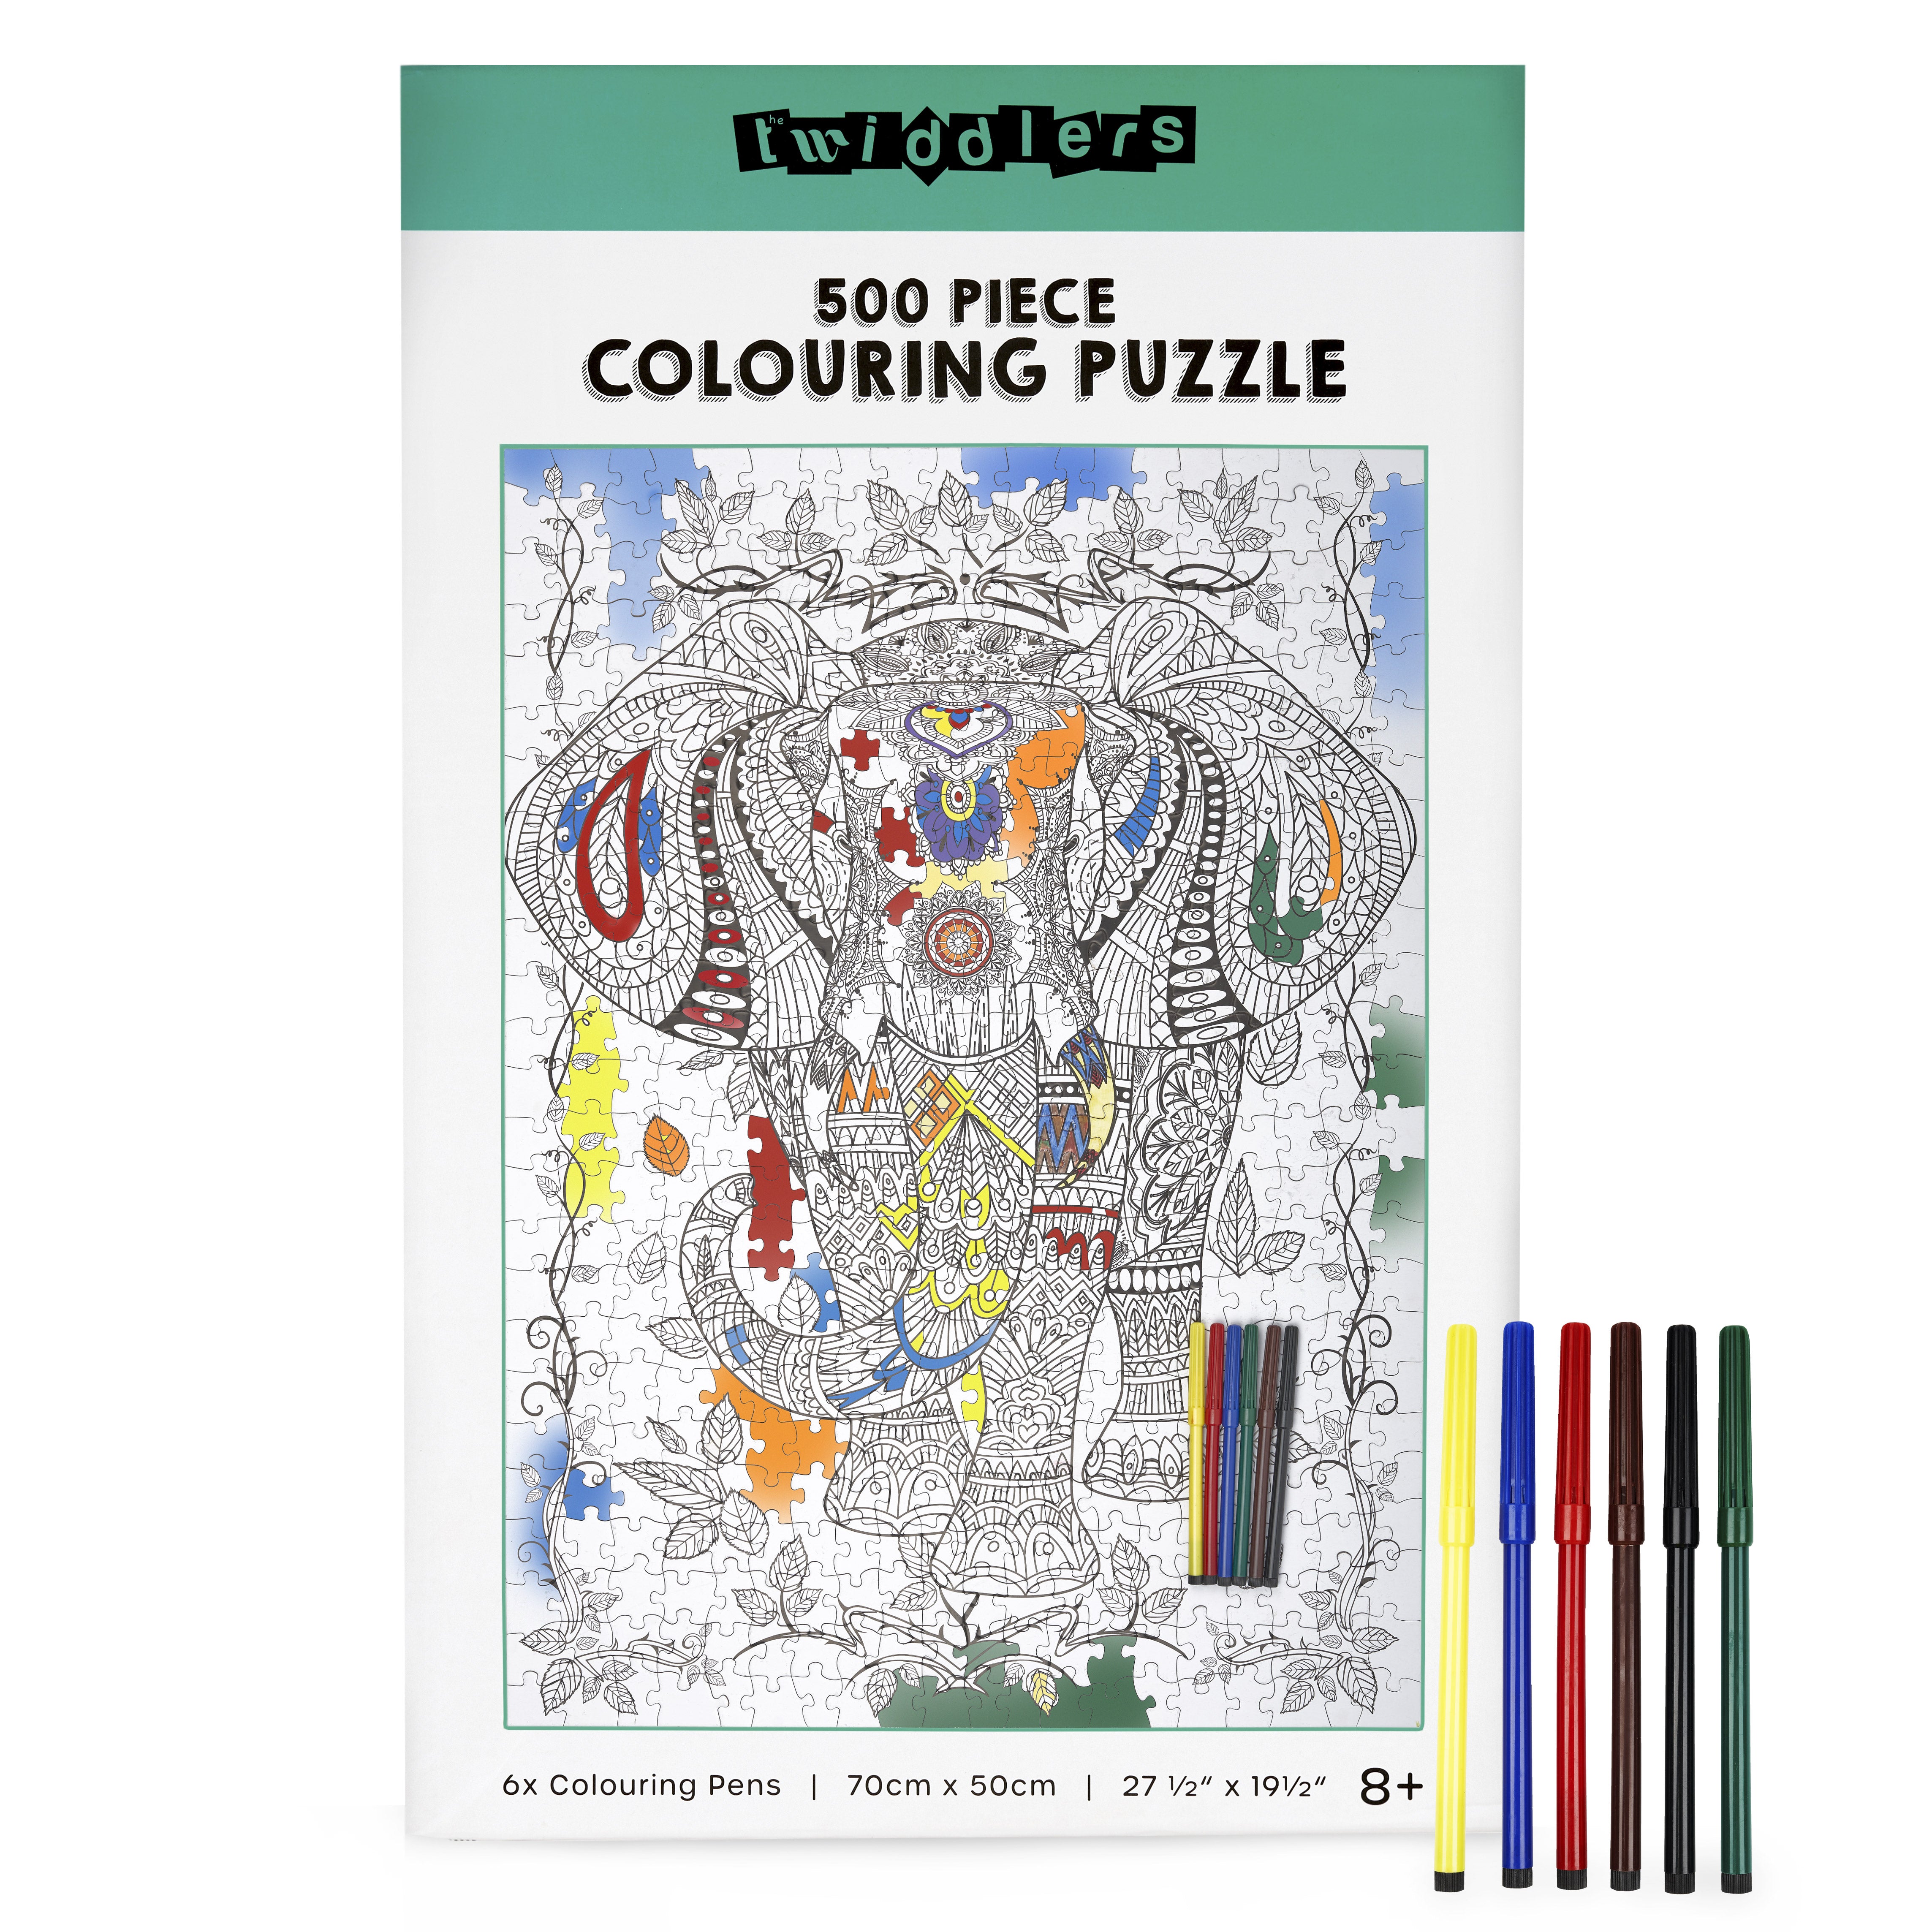 500pcs Colour-In Elephant Puzzle with 6 Pens